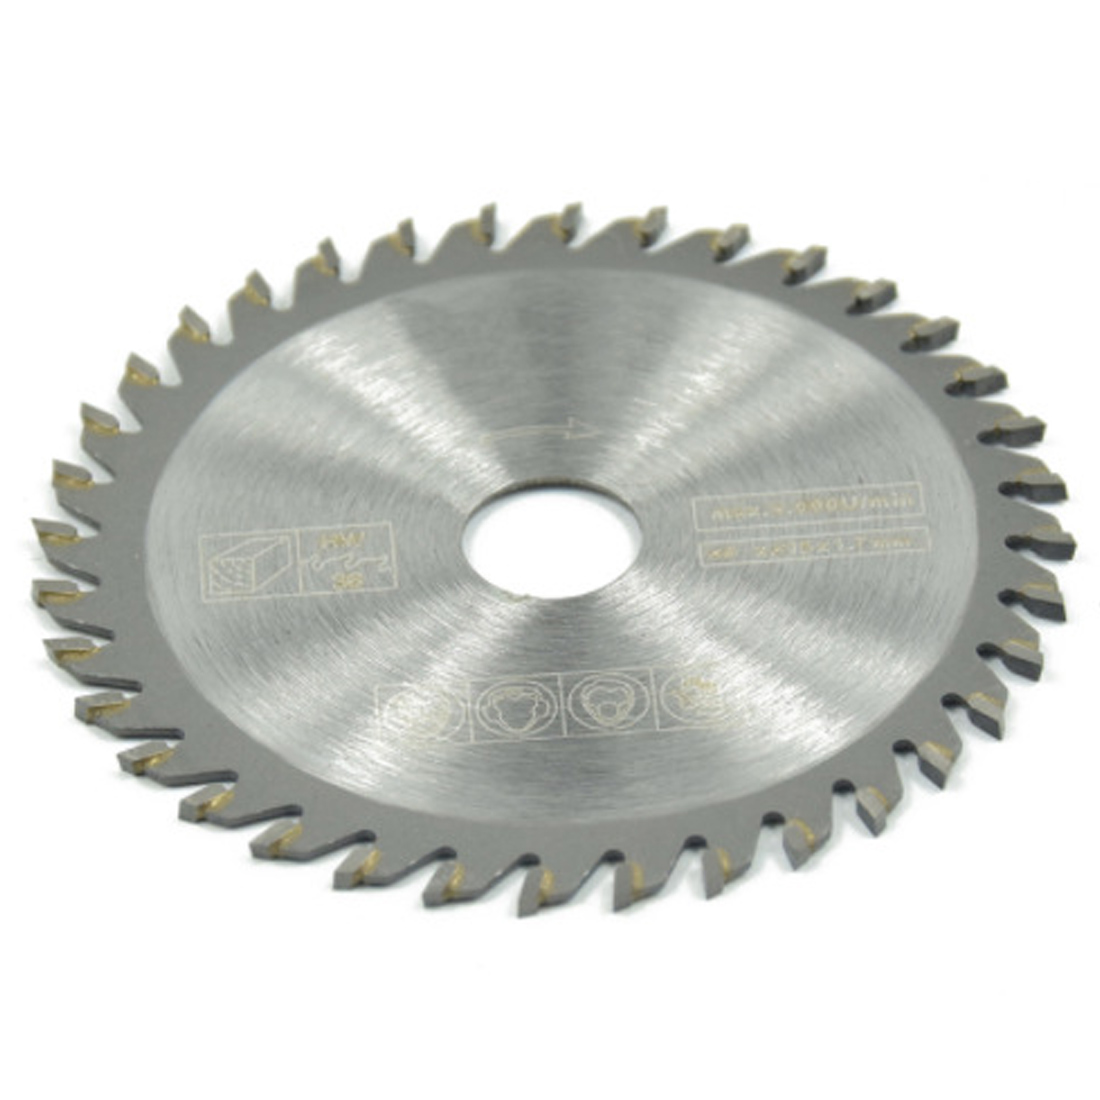 Circular saw blade 85 mm diameter 36T TCT Tungsten Carbide Mini Circular Saw Blade for Wood Cutting Power Tool Accessories